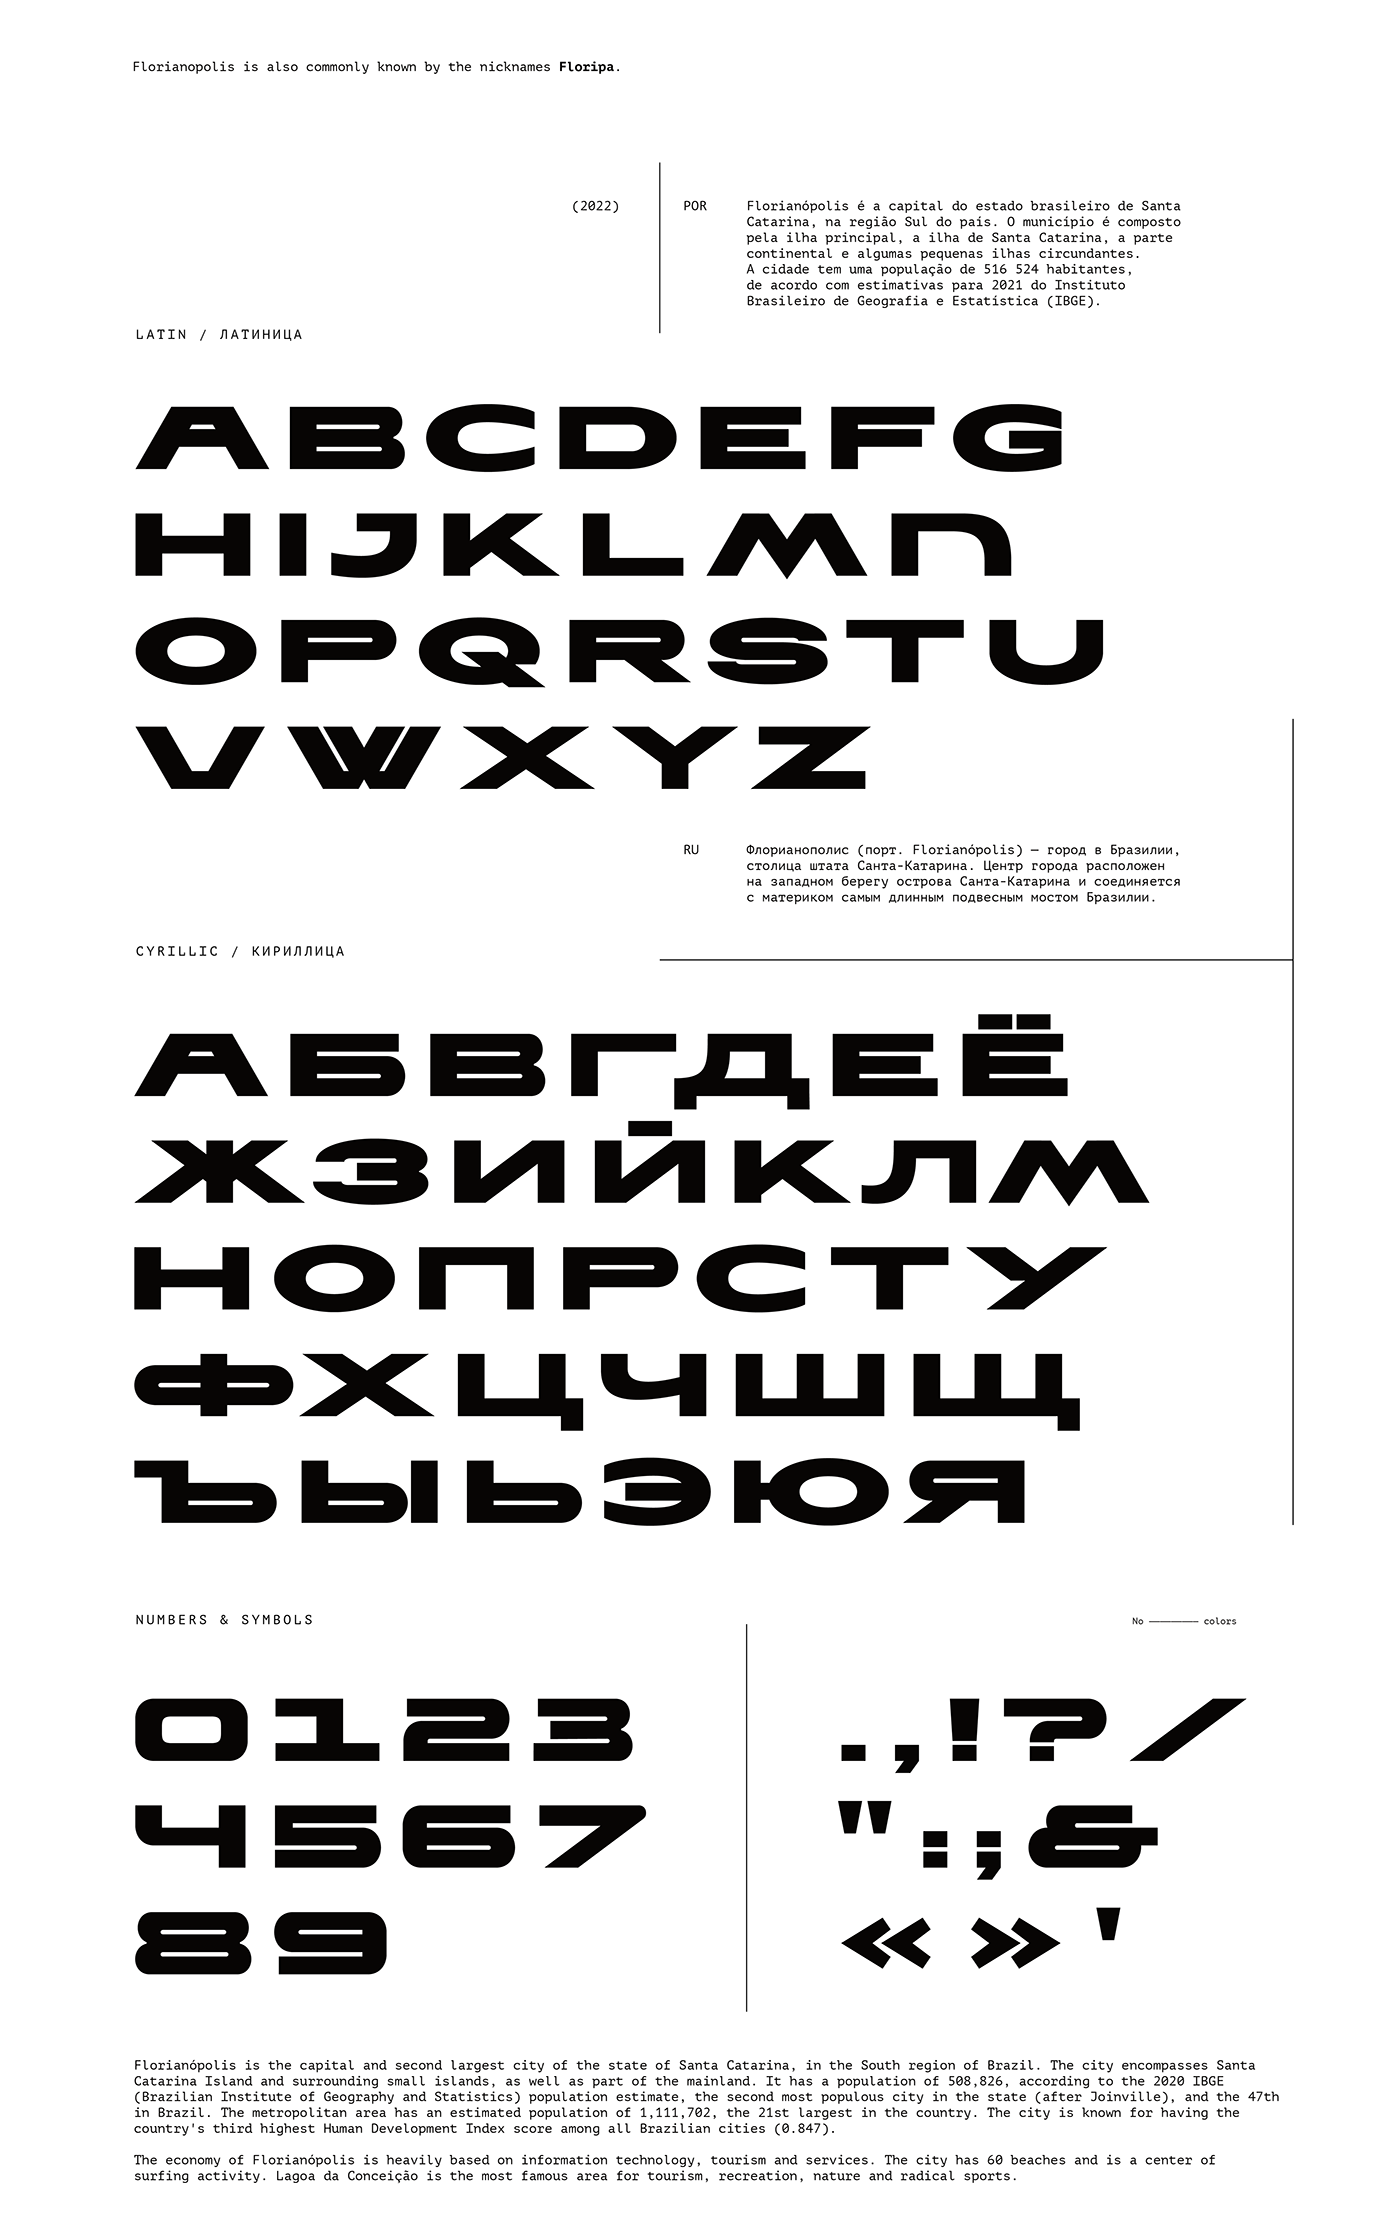 Cyrillic Florianopolis floripa font free Typeface кириллица флорипа шрифт